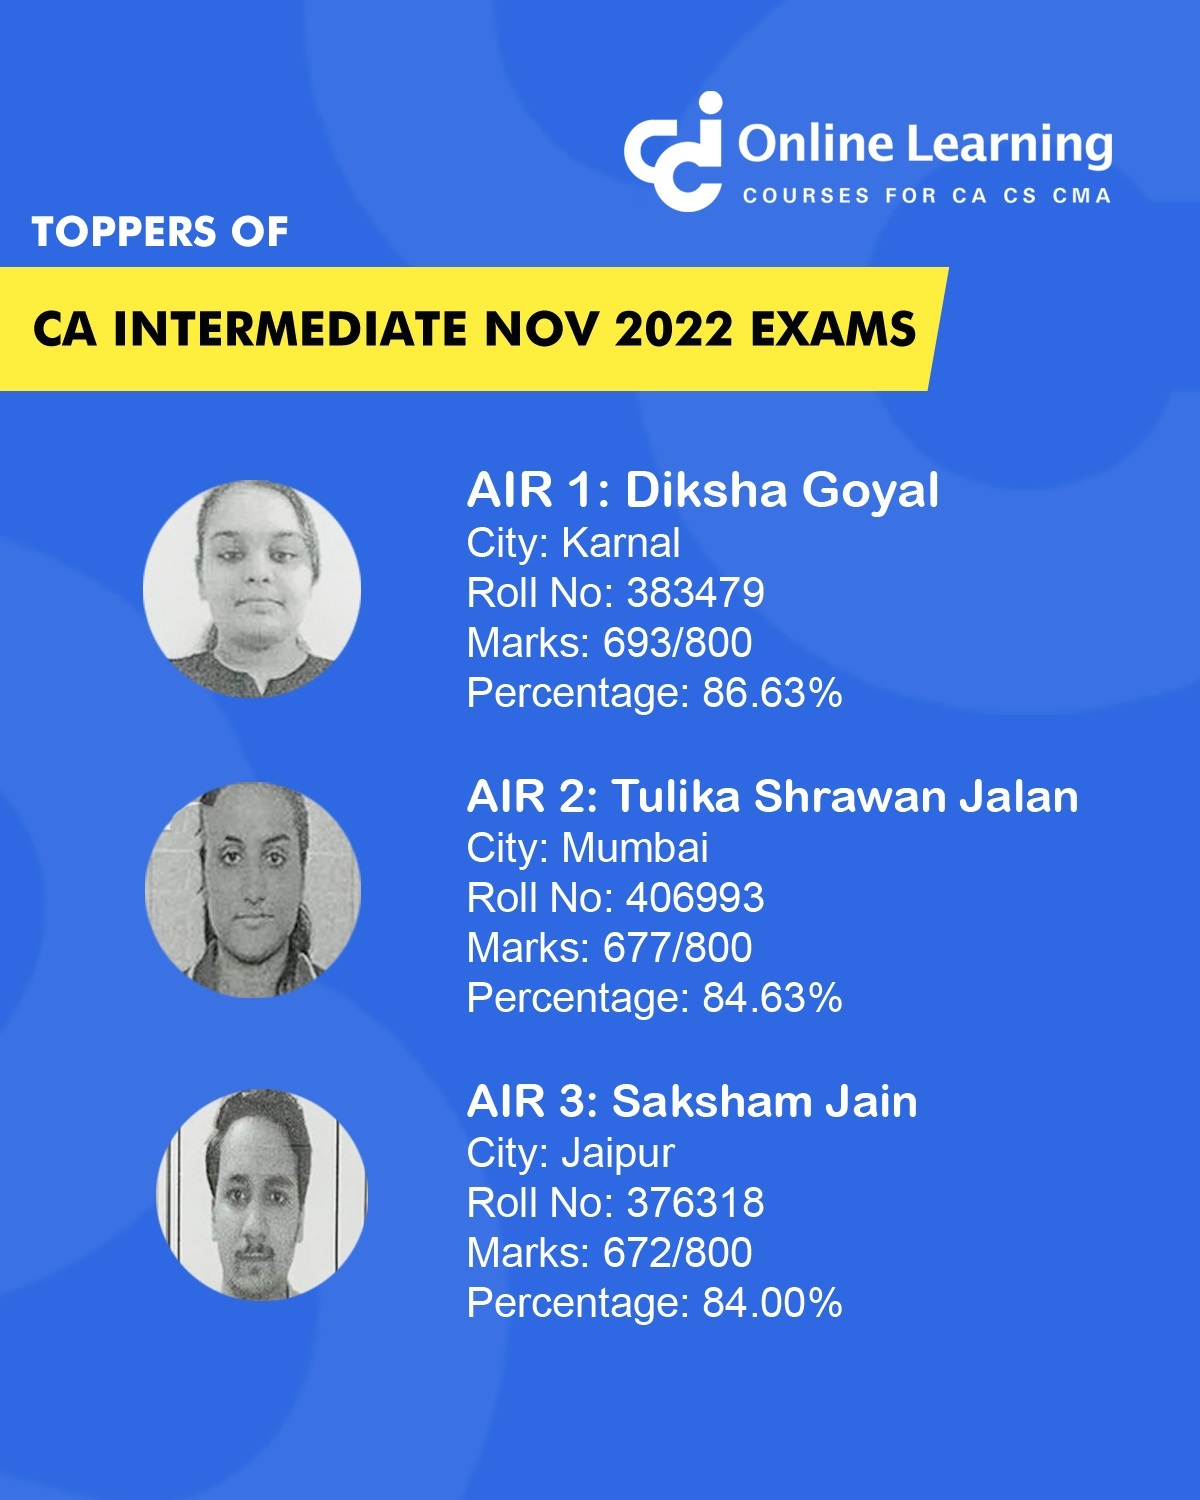 Toppers of CA Intermediate Examination held in Nov 2022